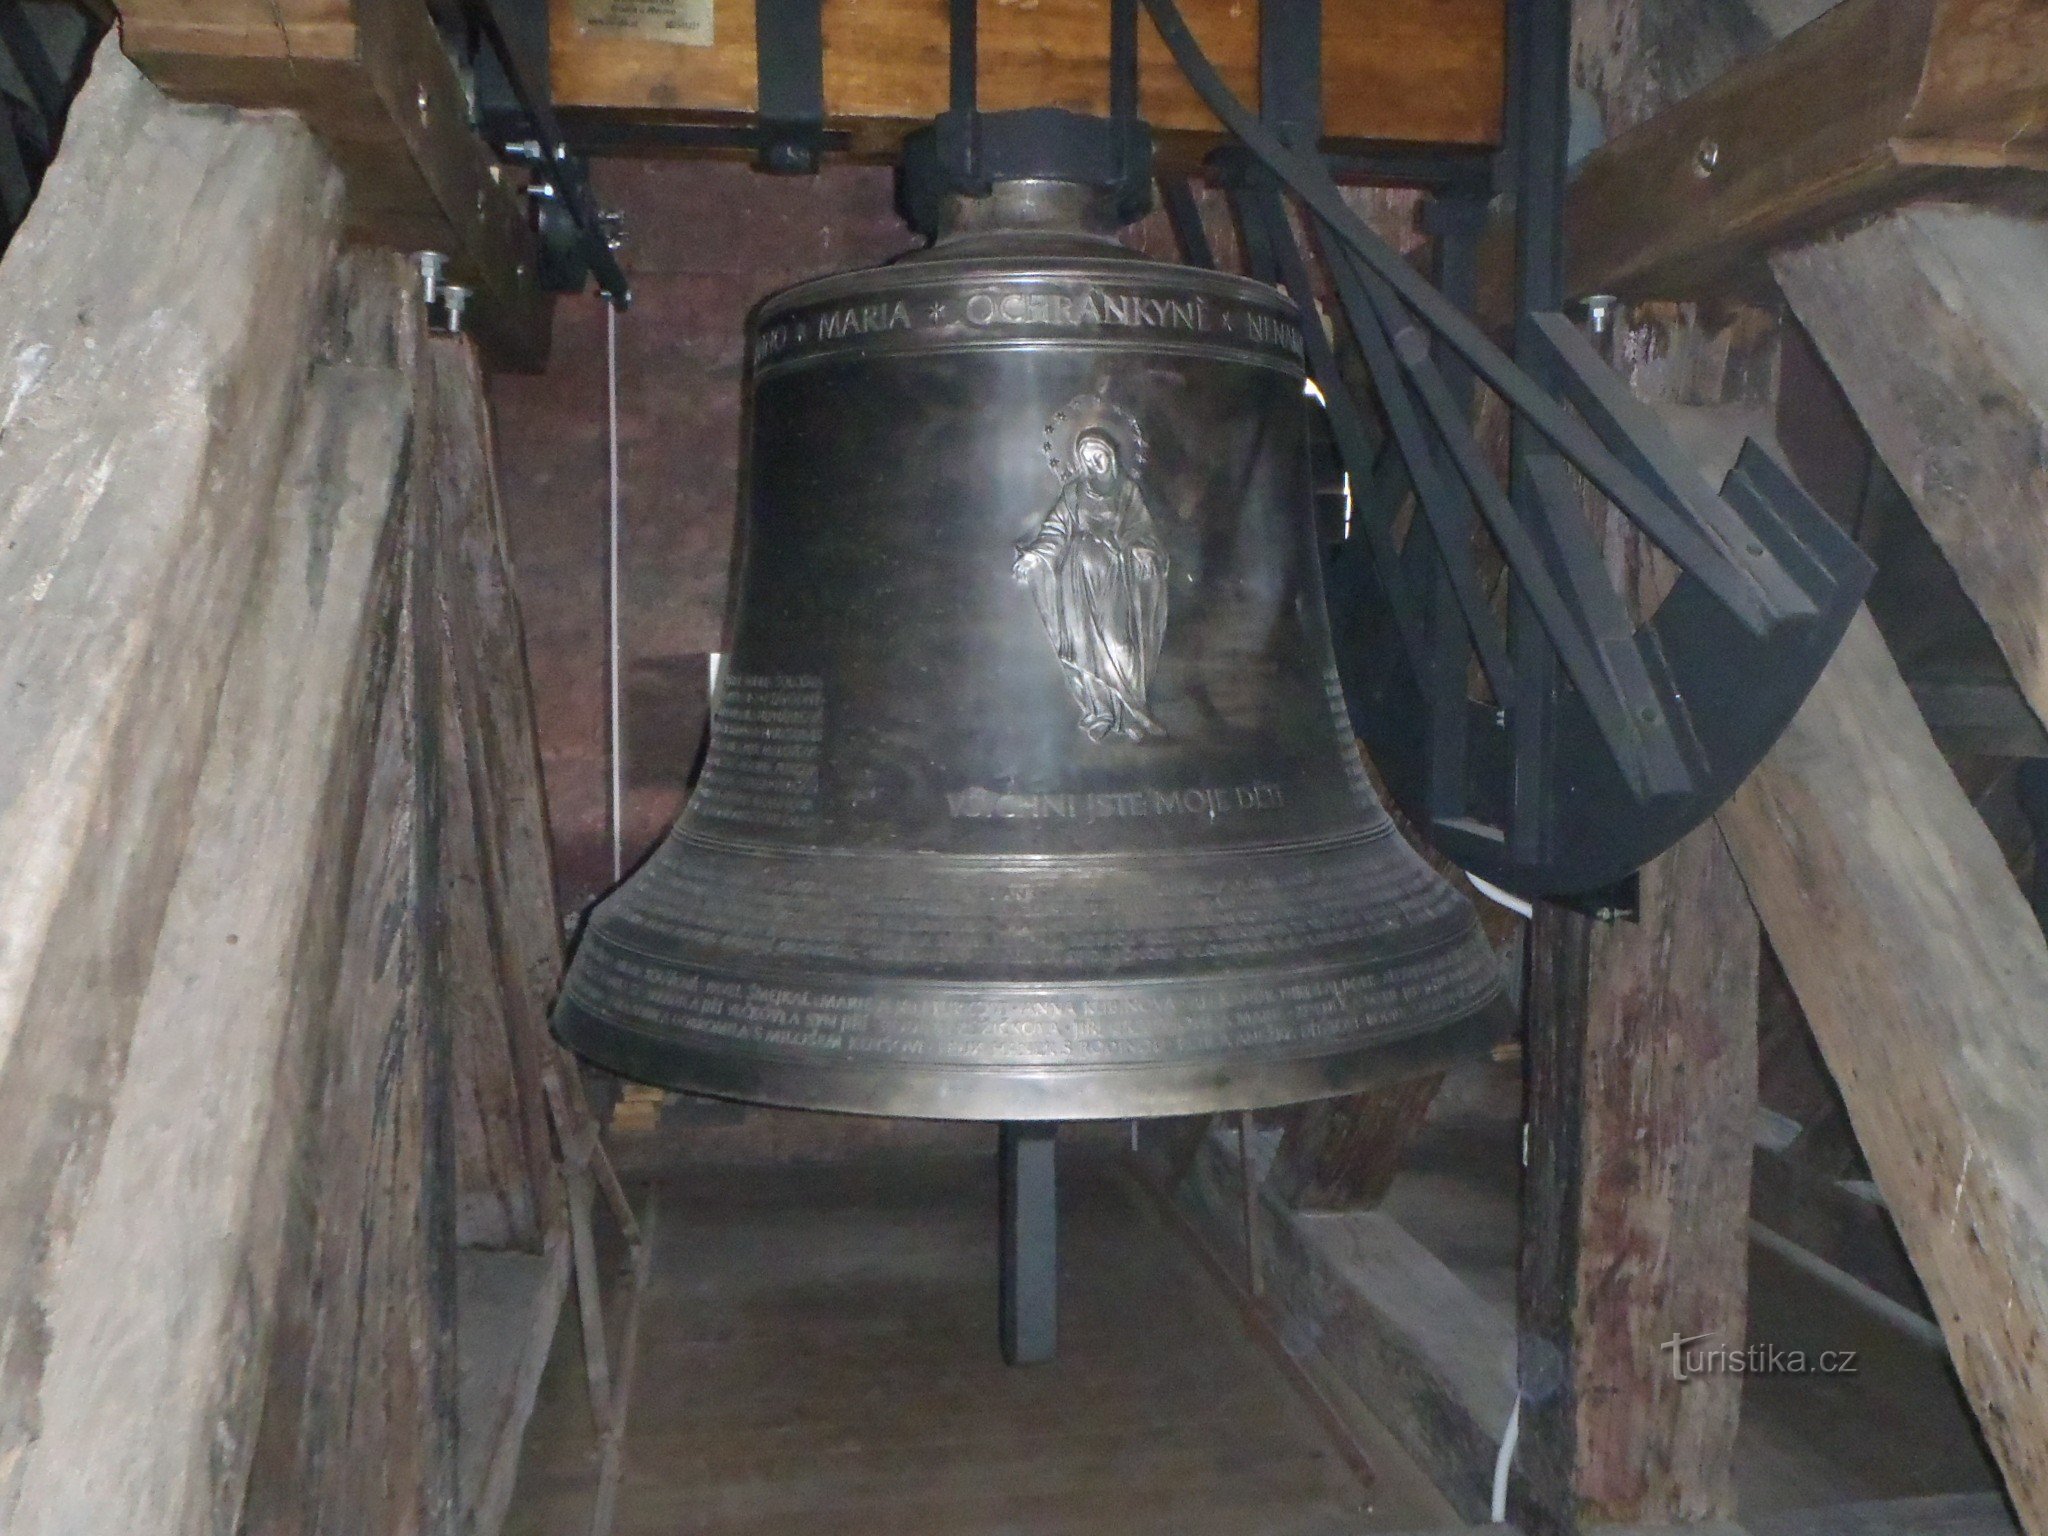 Campana de la iglesia en la torre